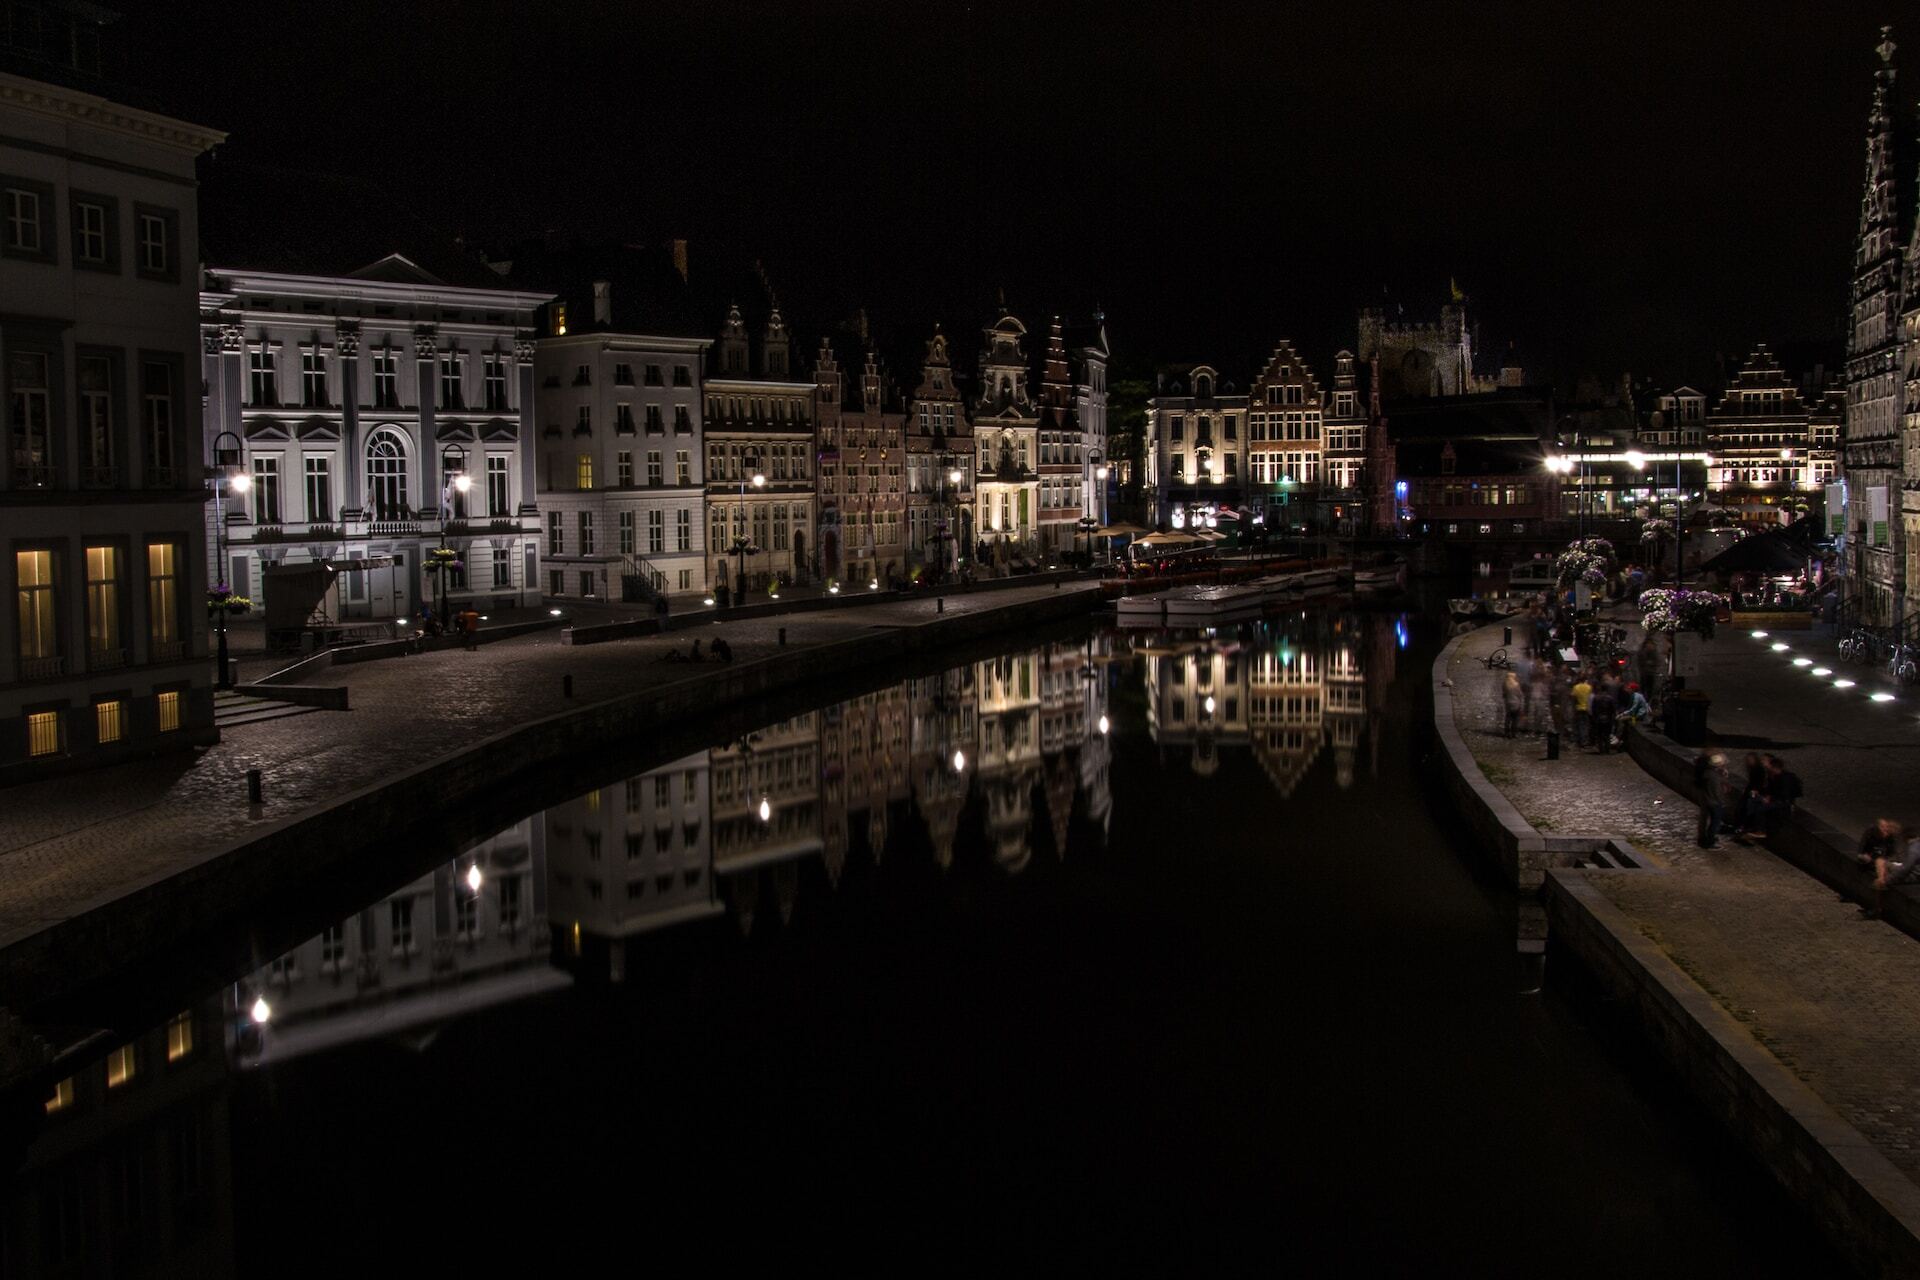 Night scene of a Belgian city